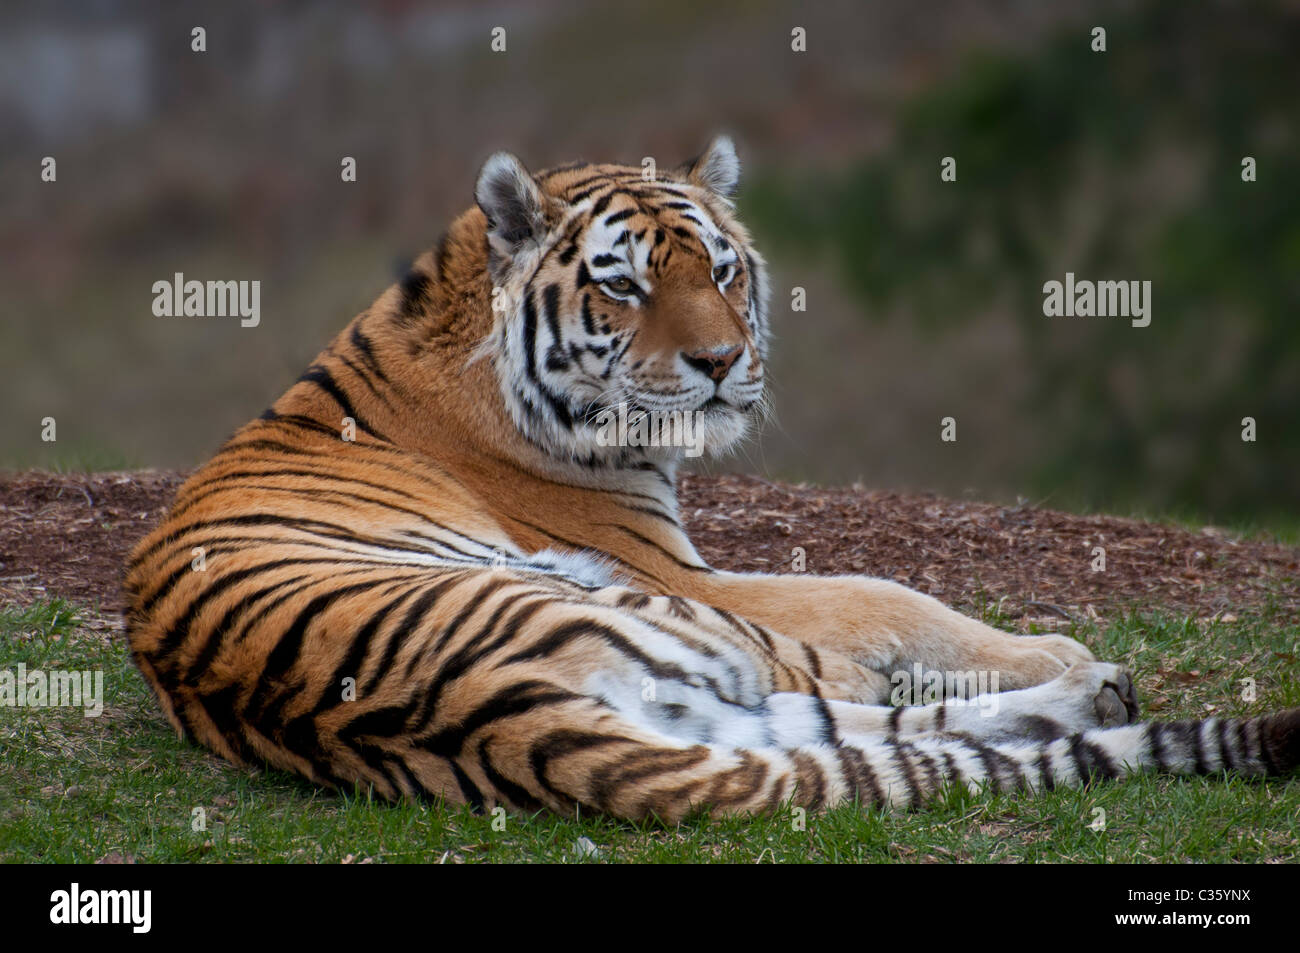 A view of a Sumatran Tiger. Stock Photo